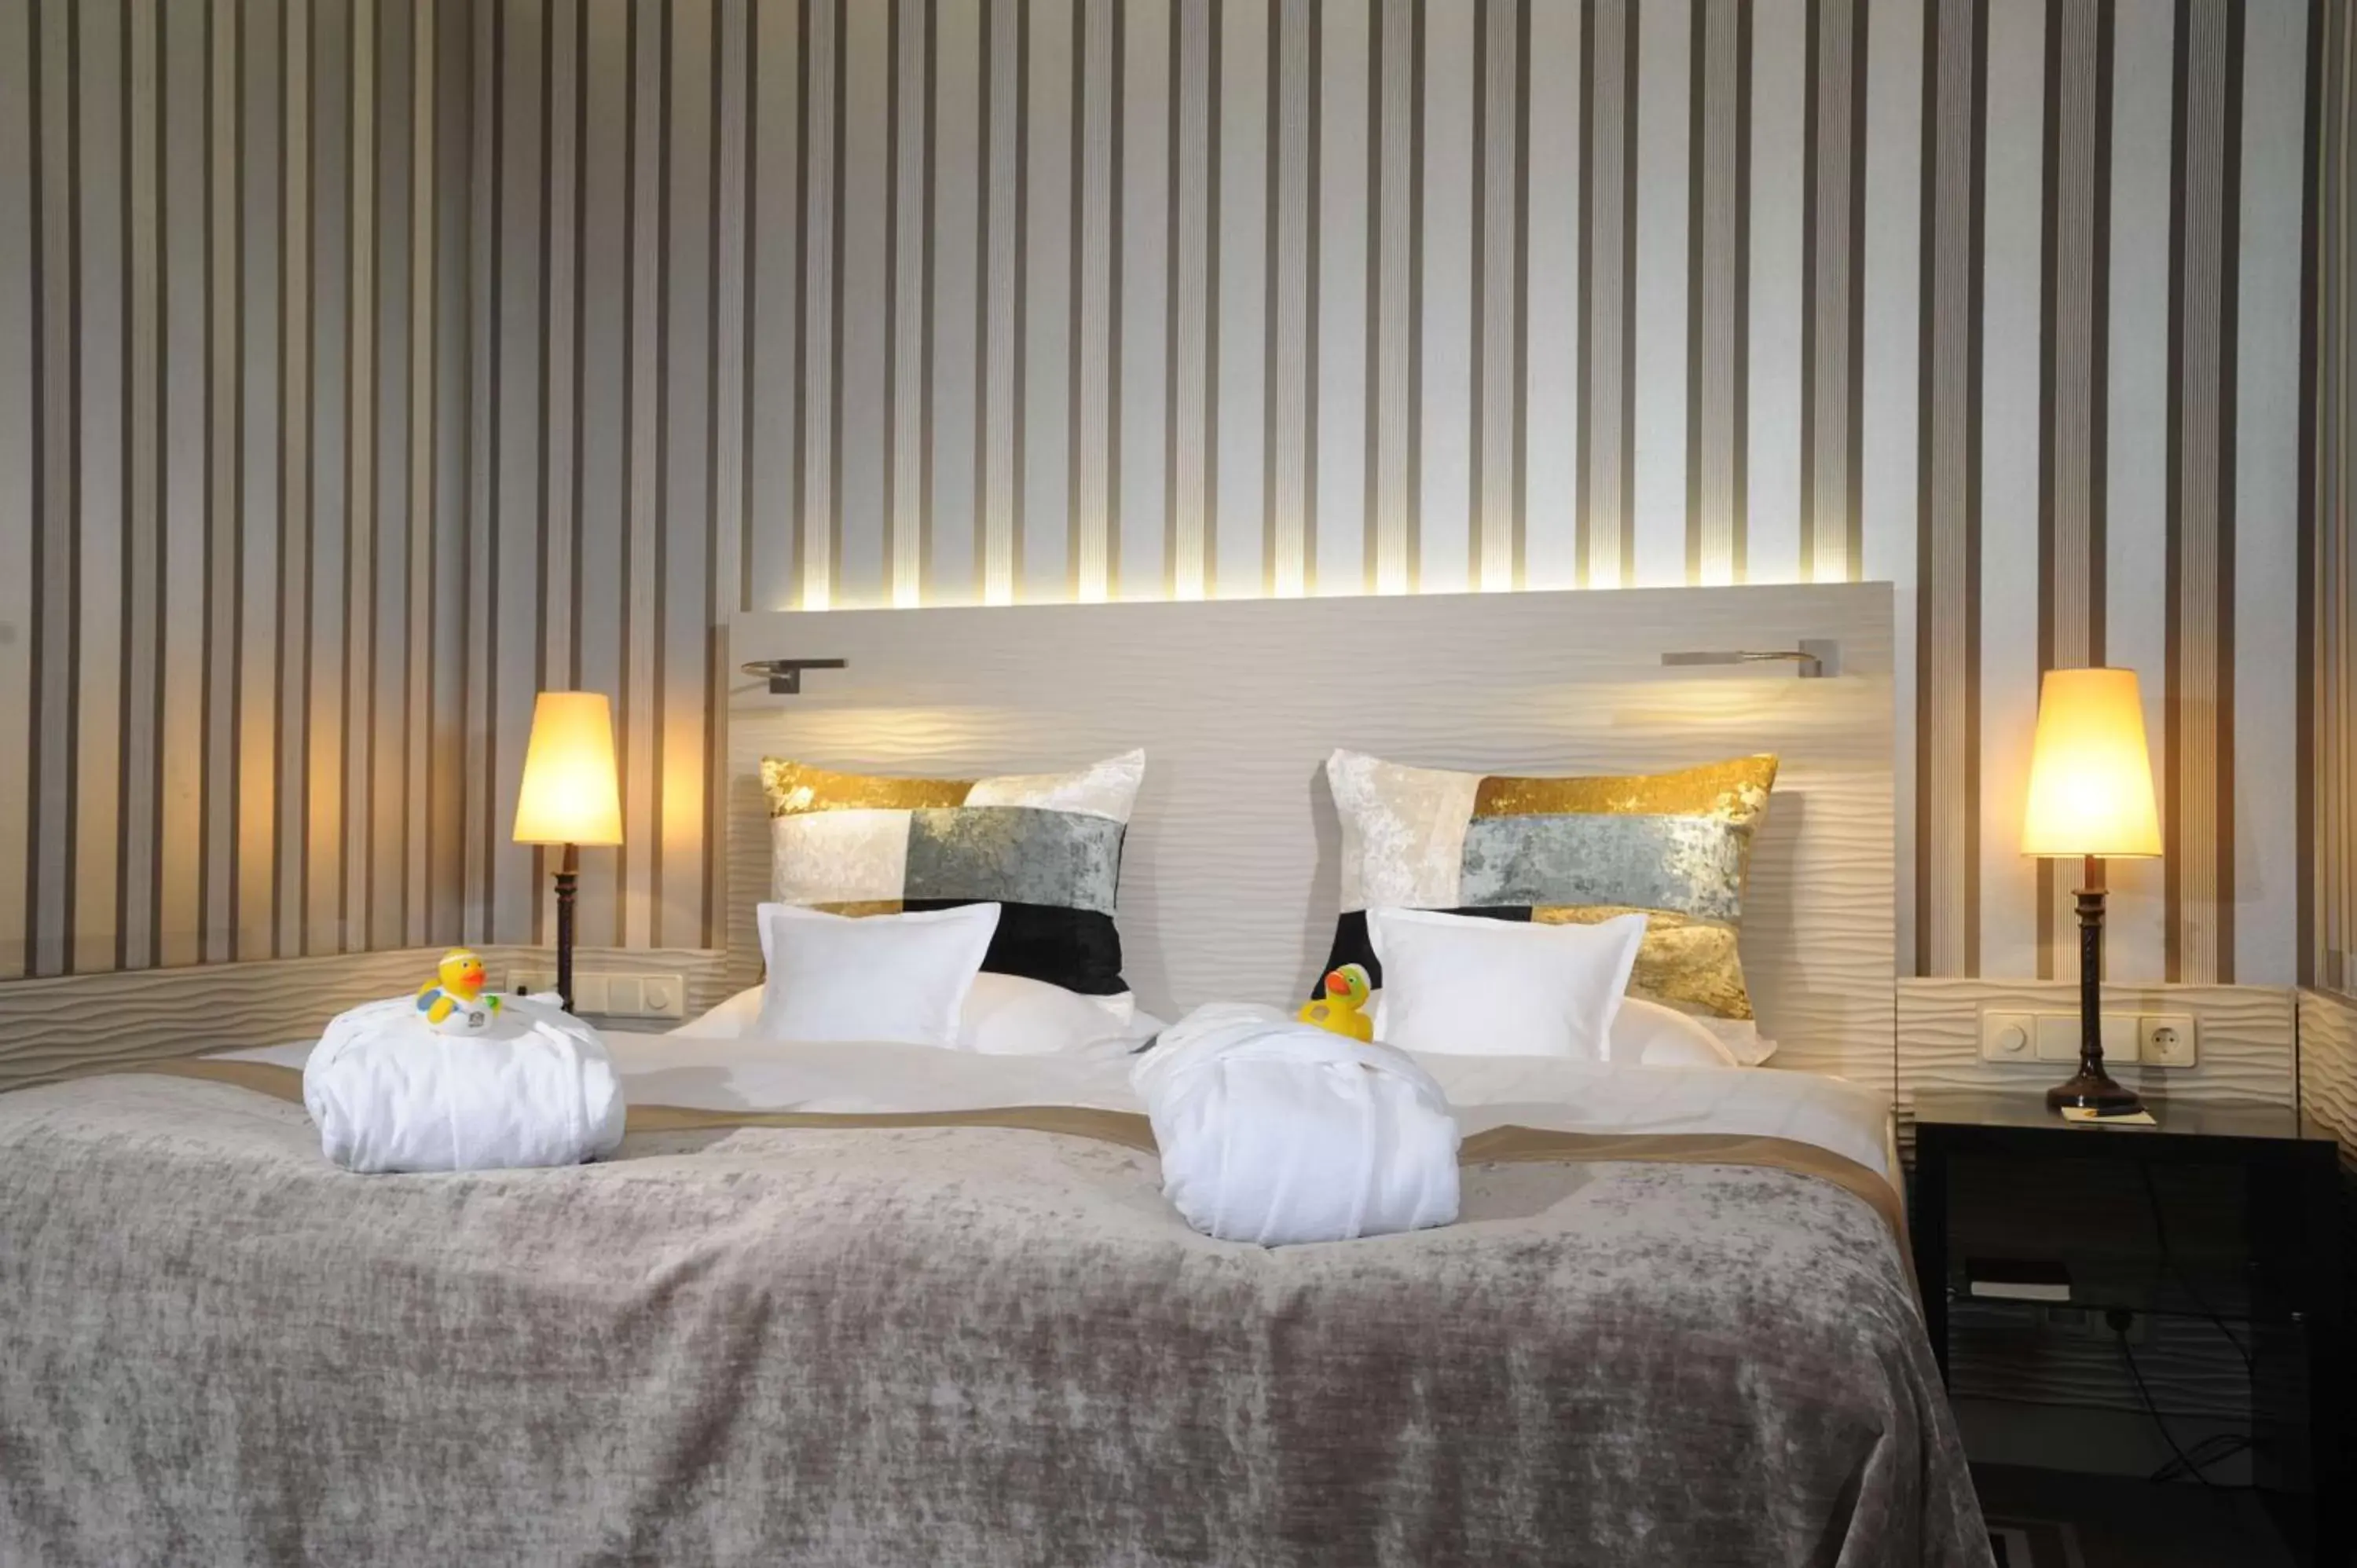 Photo of the whole room, Bed in Best Western Premier Parkhotel Kronsberg